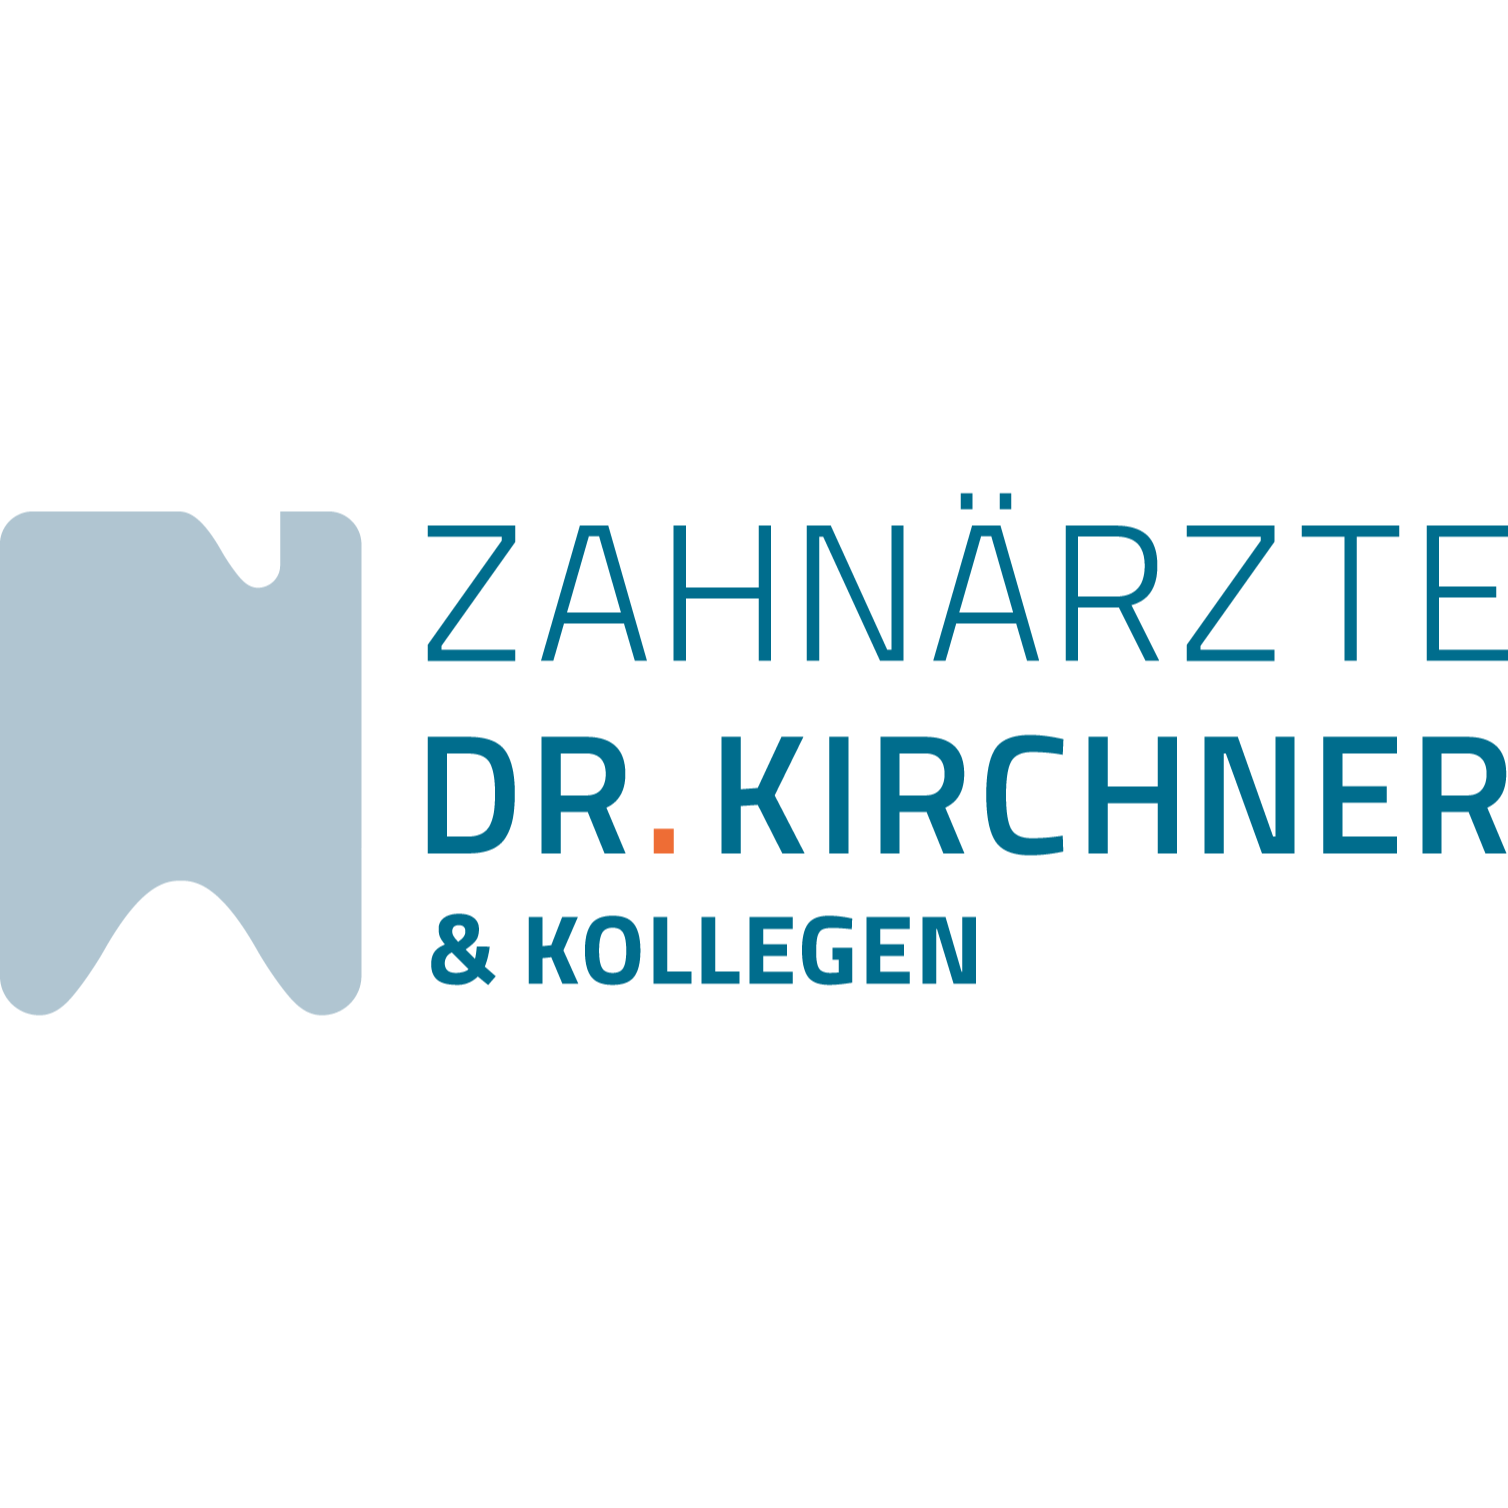 Zahnärzte Dr. Kirchner & Kollegen Köln in Köln - Logo